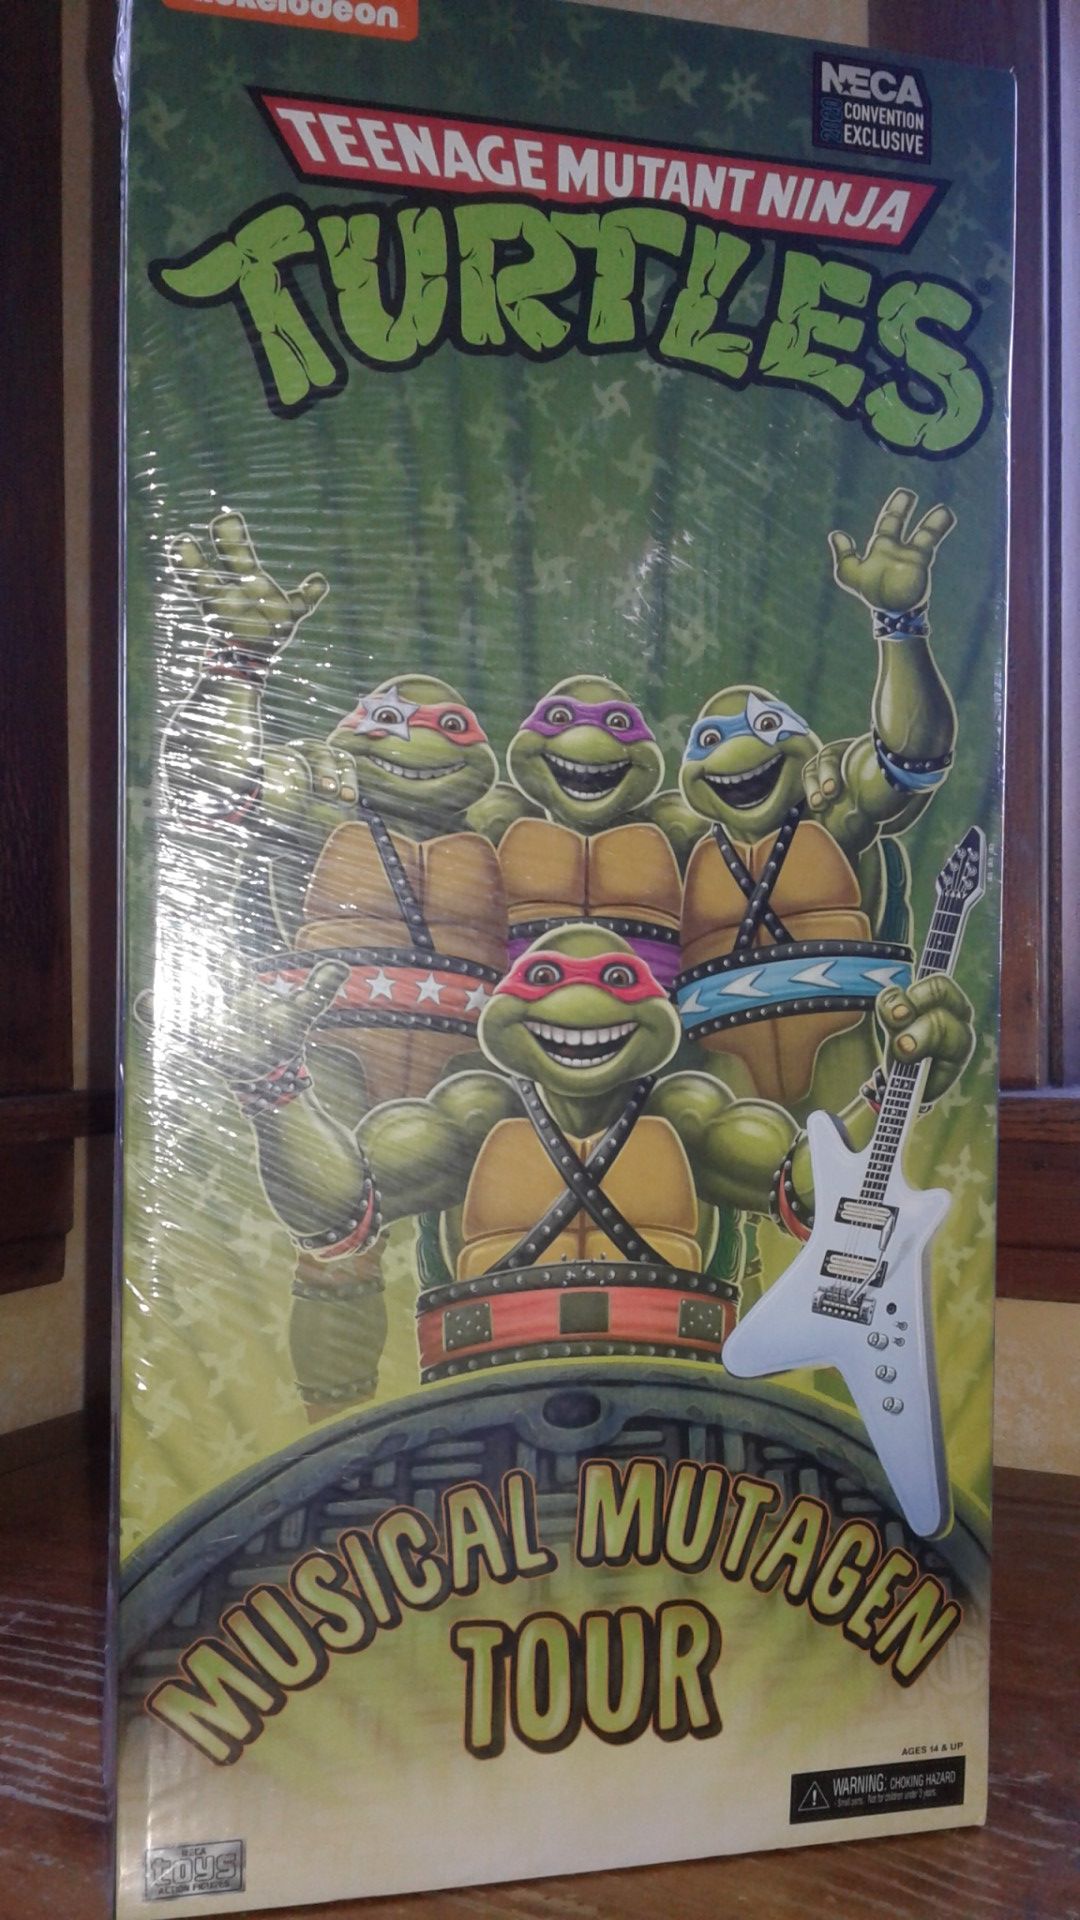 Neca teenage mutant ninja turtles musical mutagen tour collectible action figures.